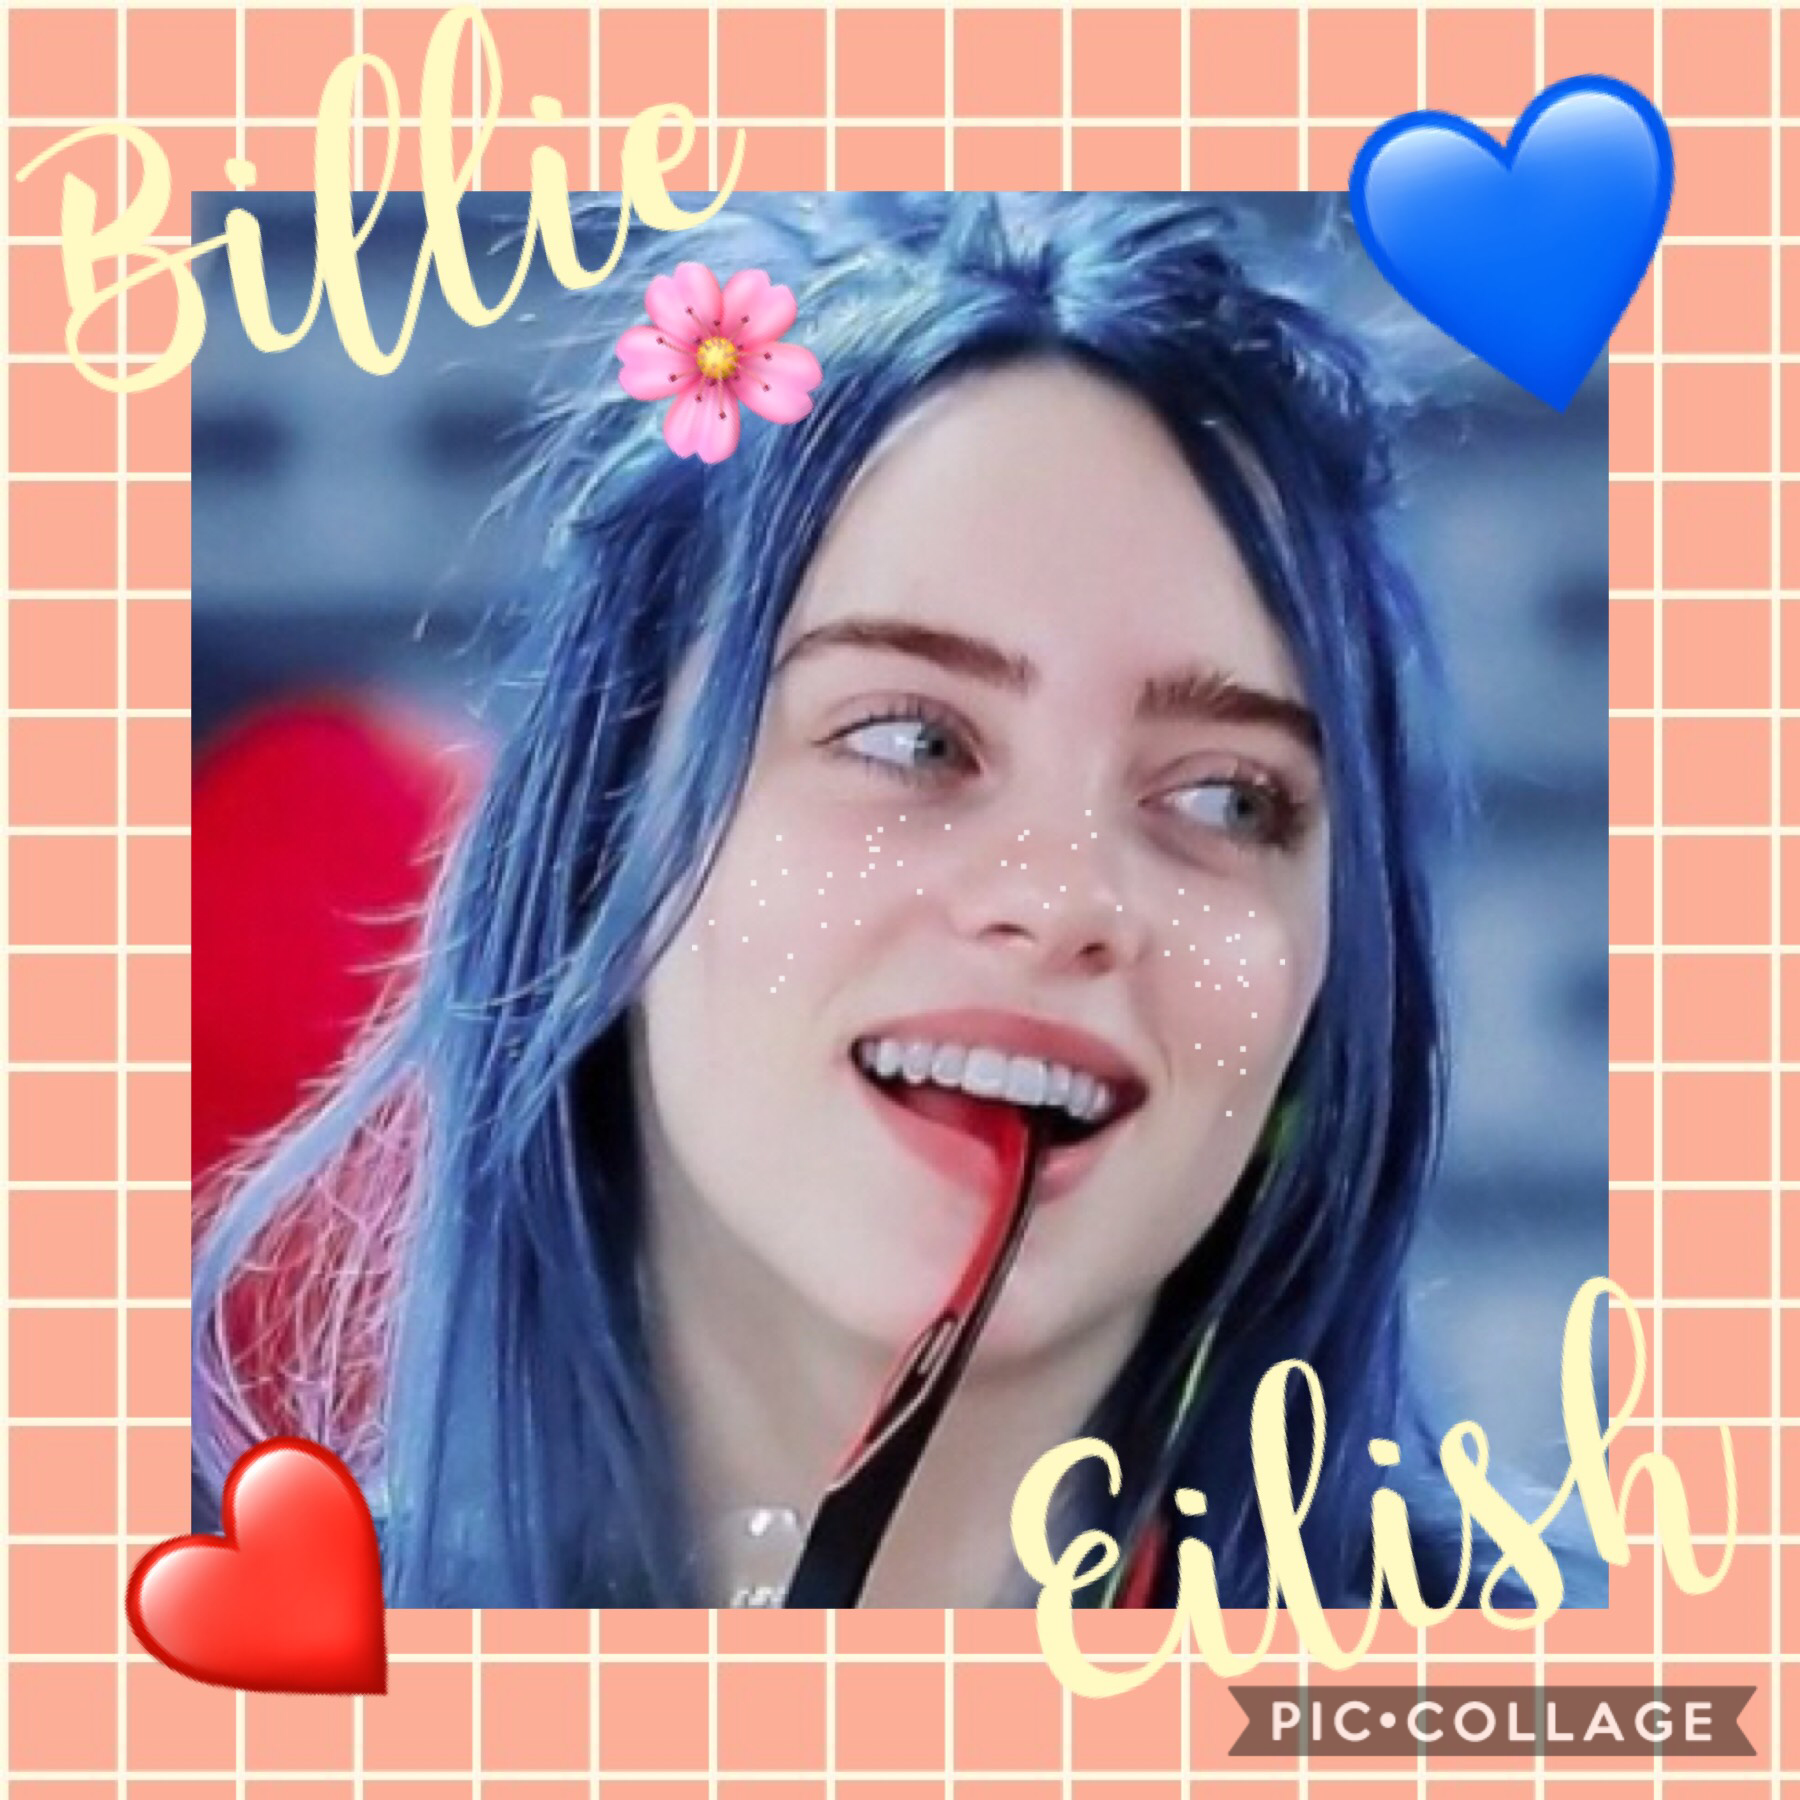 Billie Eilish edit I made ^^